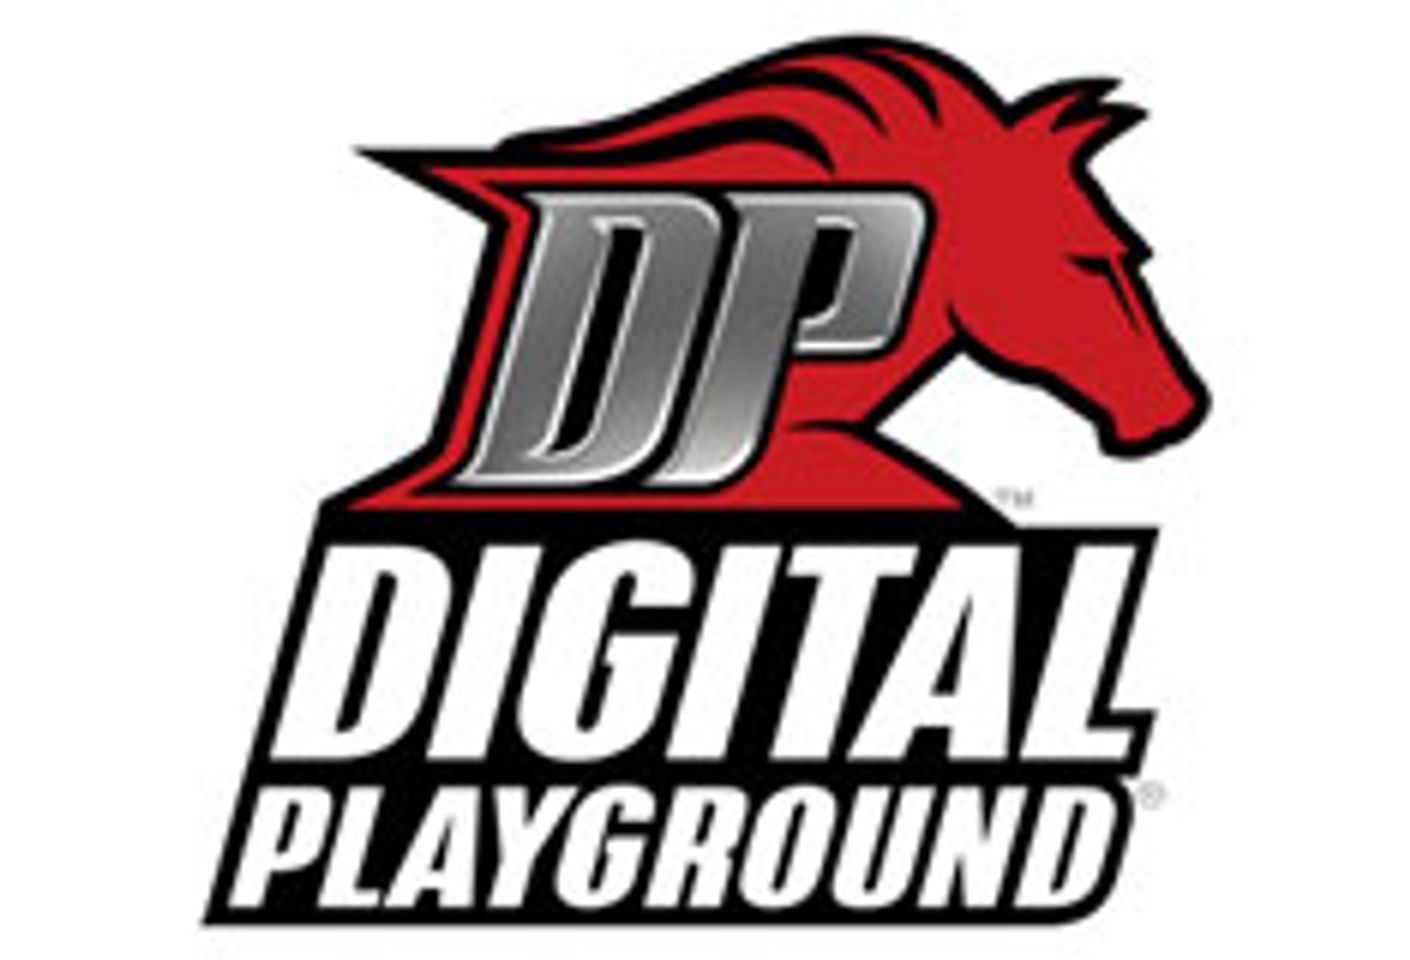 Digital Playground Registers 'Virtual Sex' as Trademark